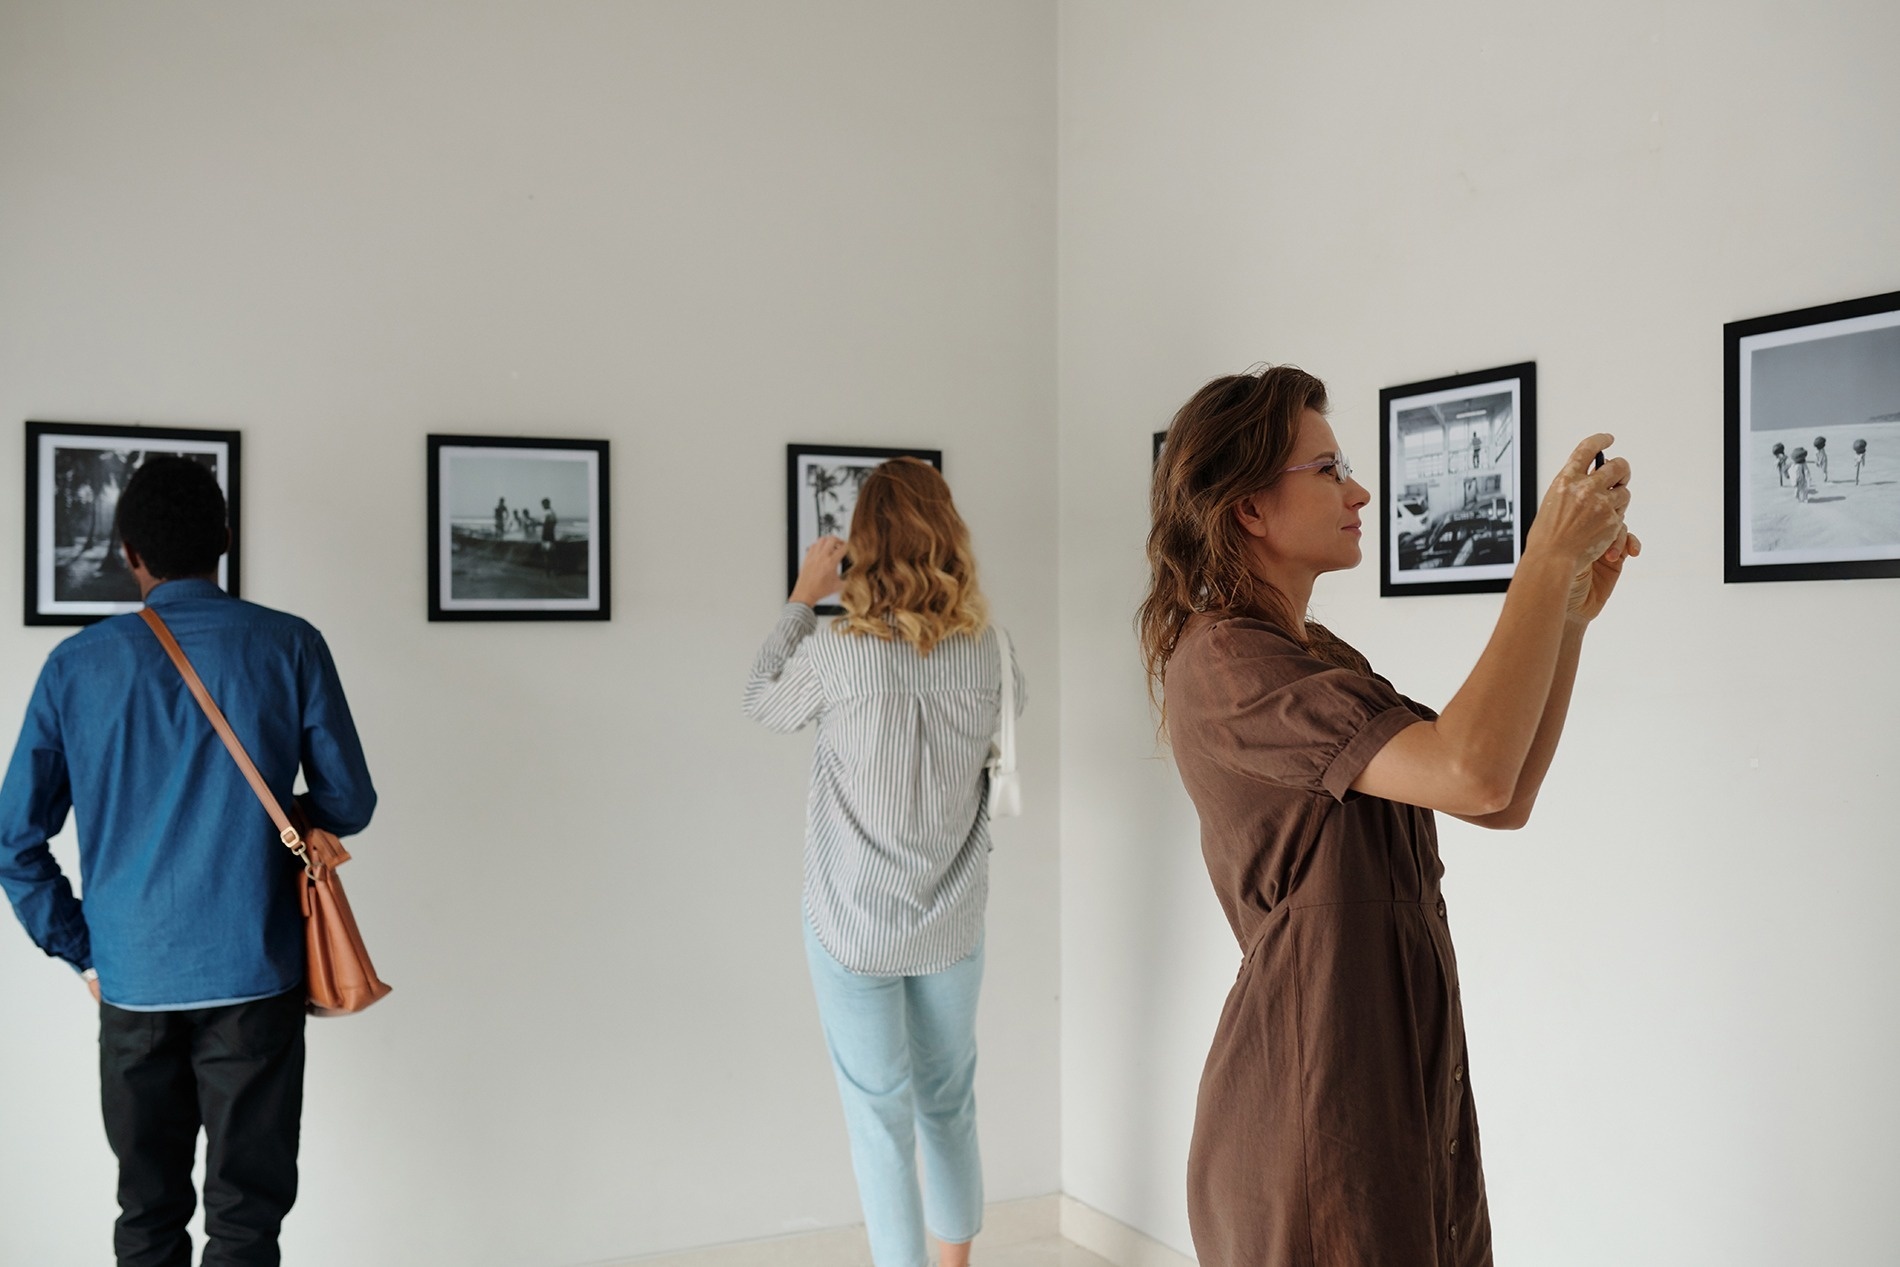 Photography exhibition in Fuengirola